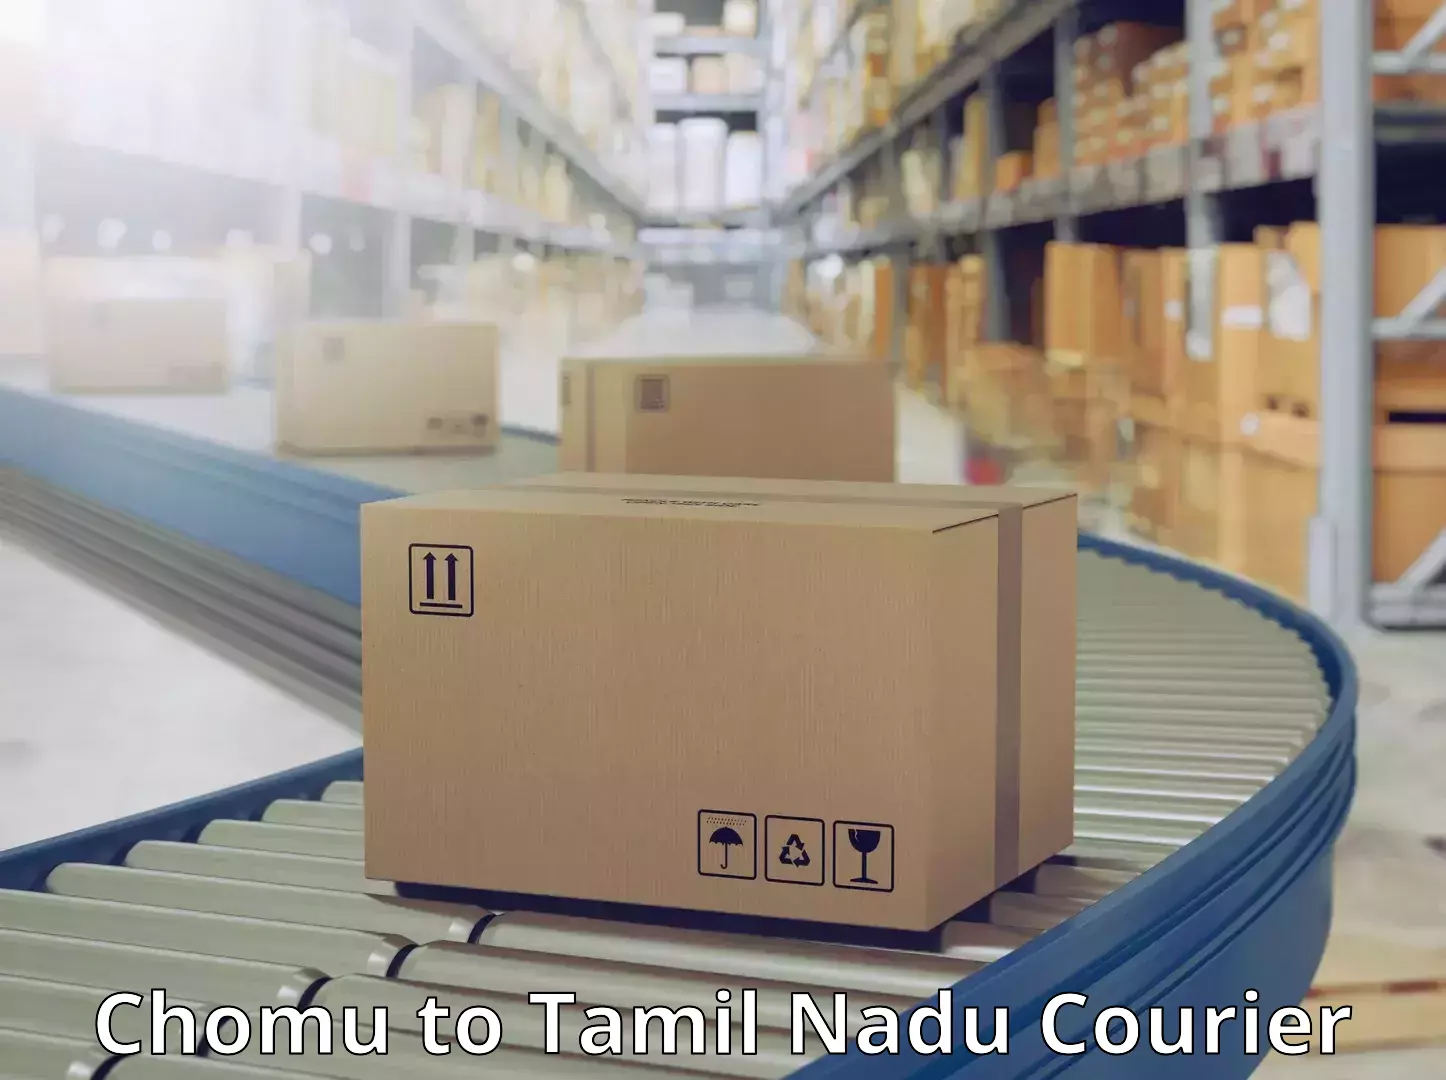 Doorstep delivery service Chomu to Tamil Nadu